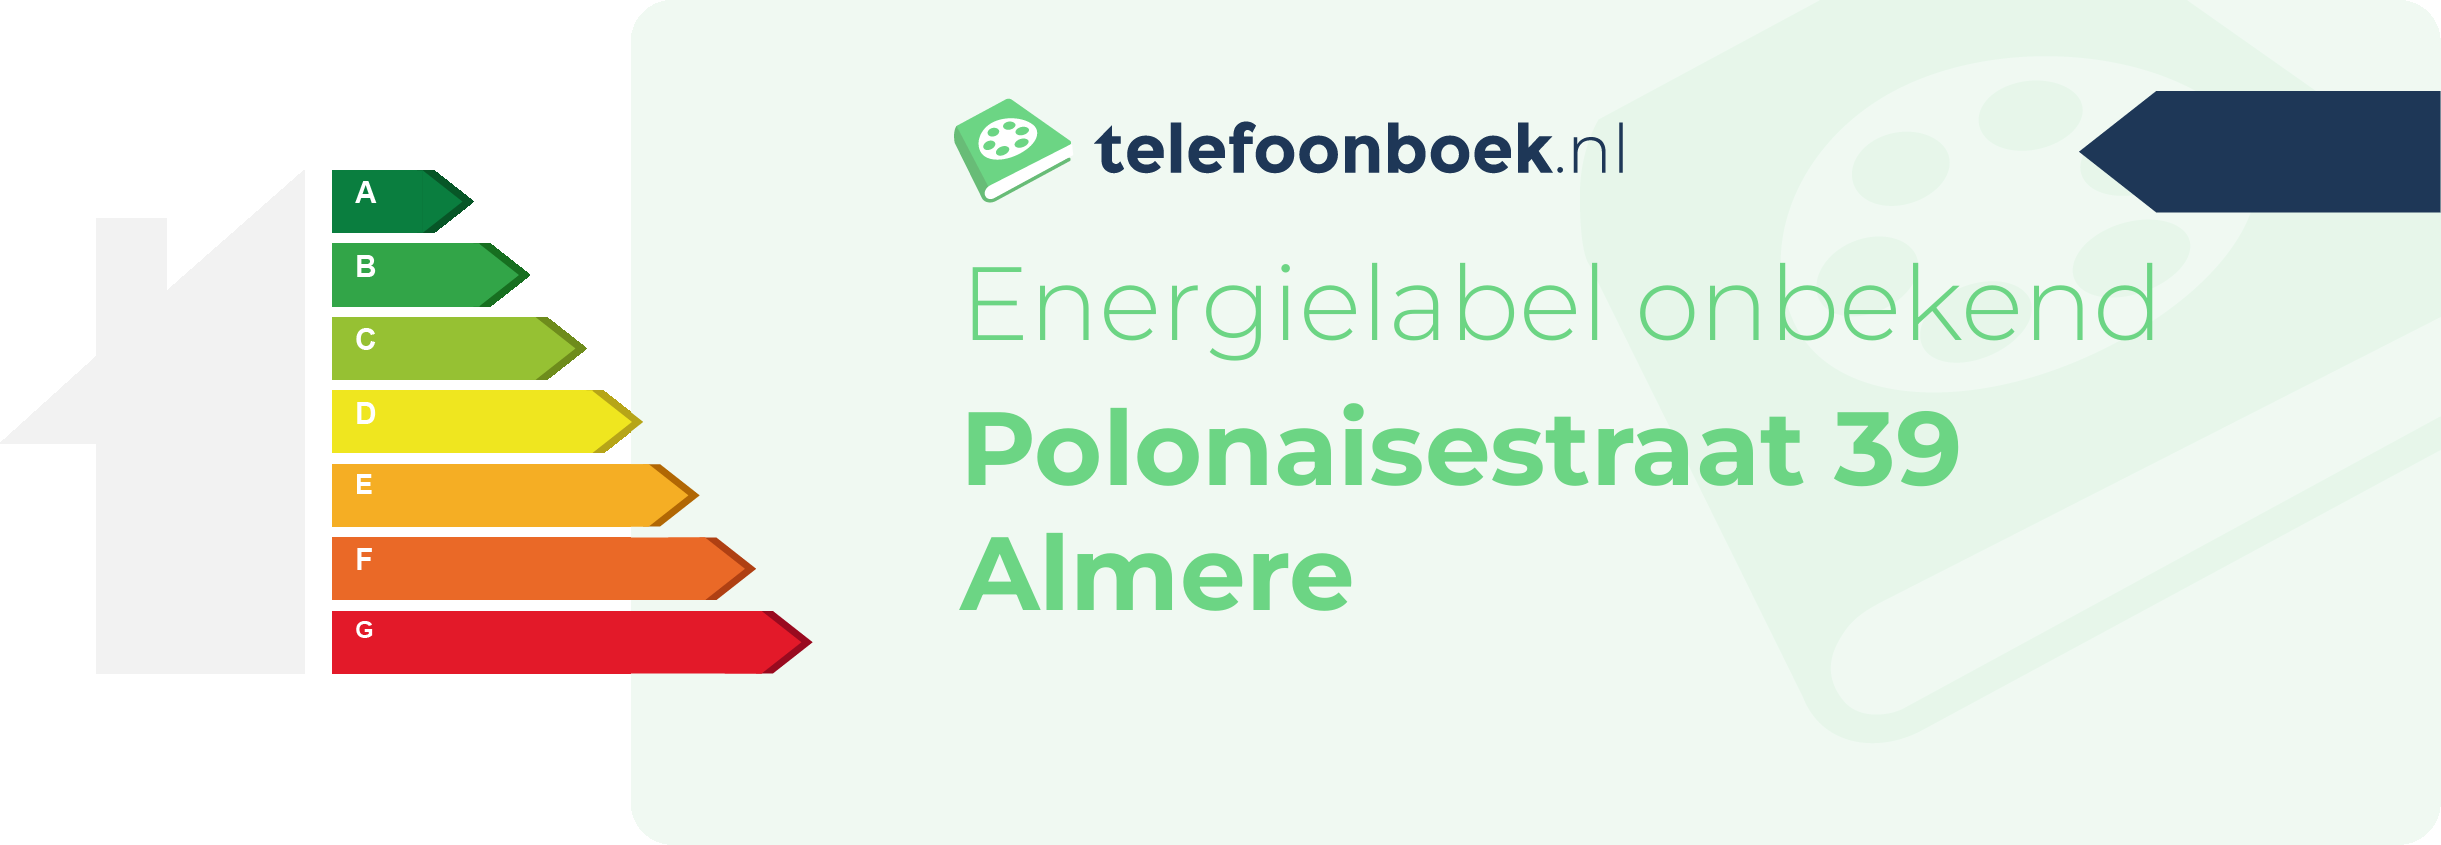 Energielabel Polonaisestraat 39 Almere